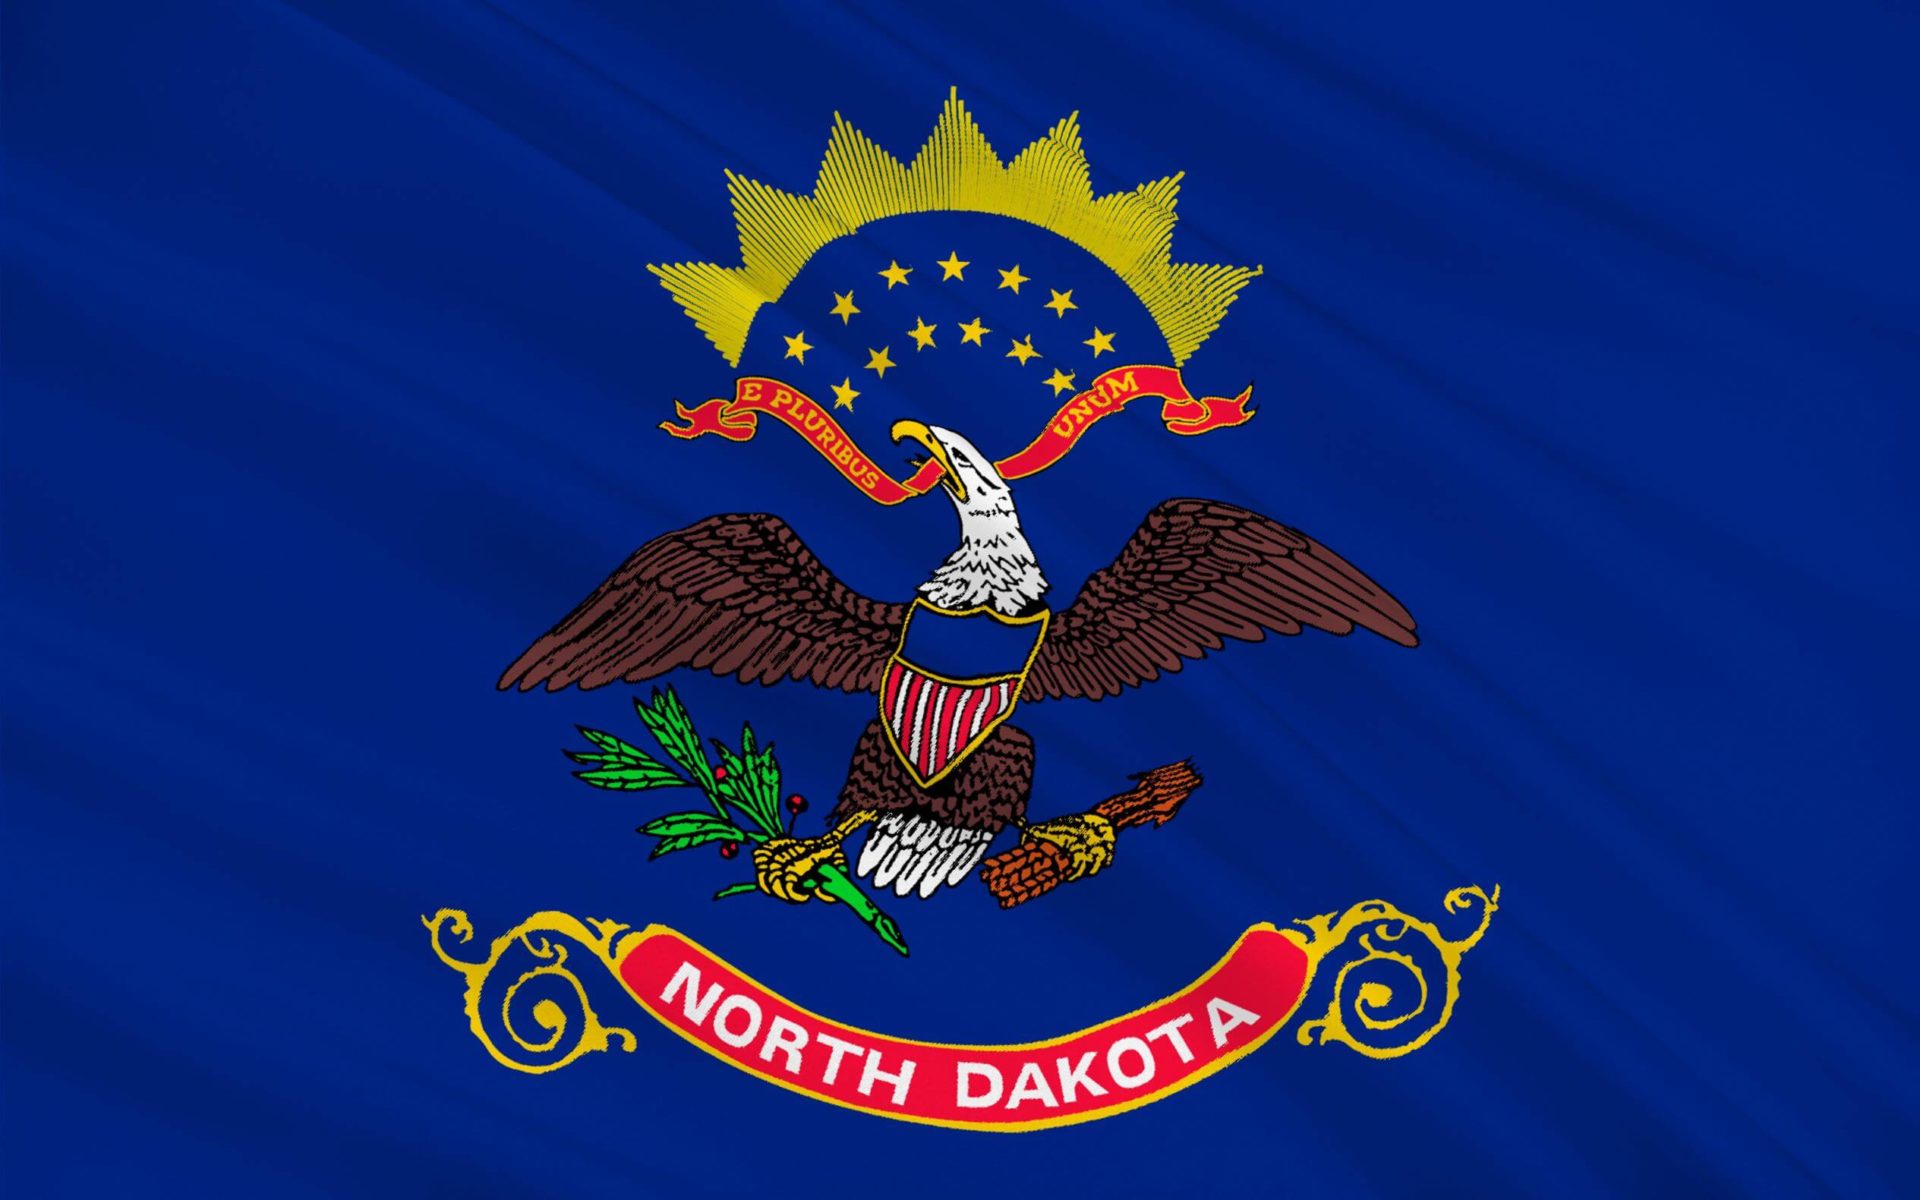 An image of the North Dakota state flag.